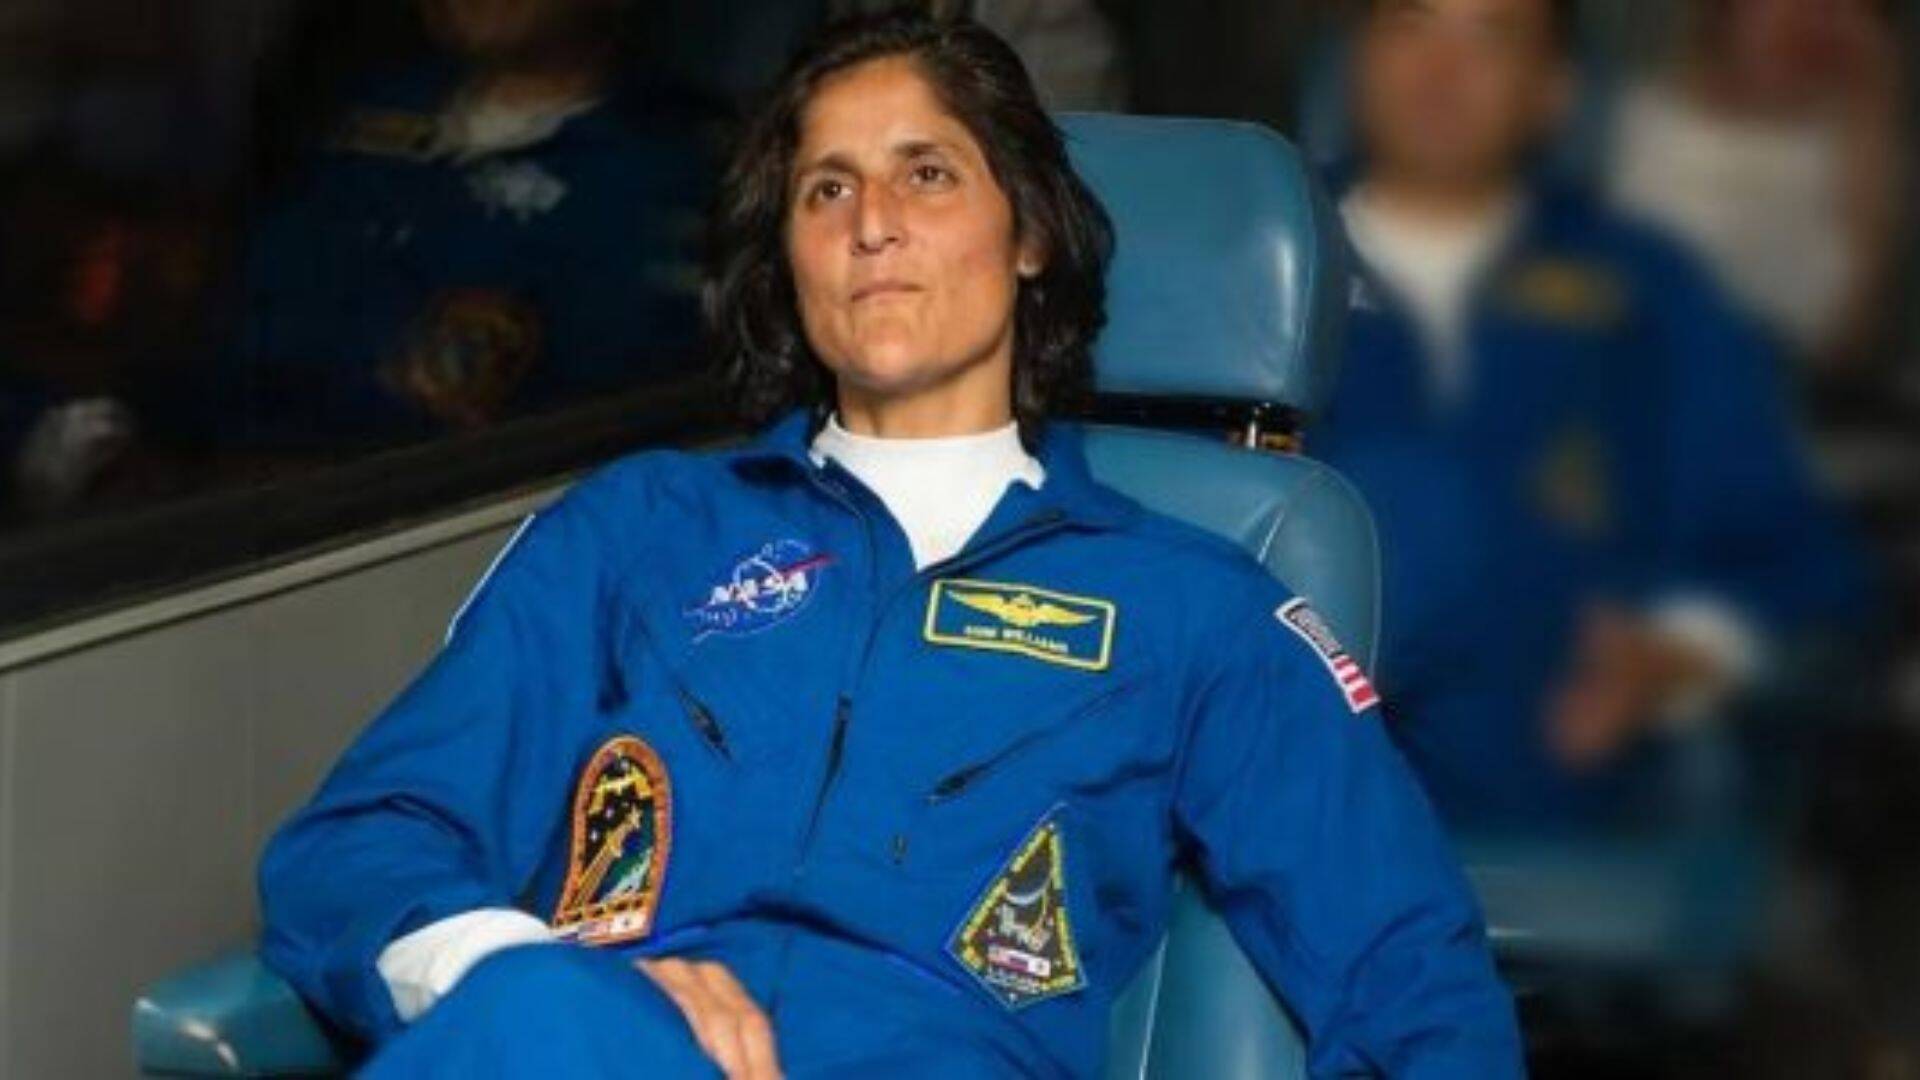 NASA: Return Date Of Astronaut Sunita Williams To Earth?